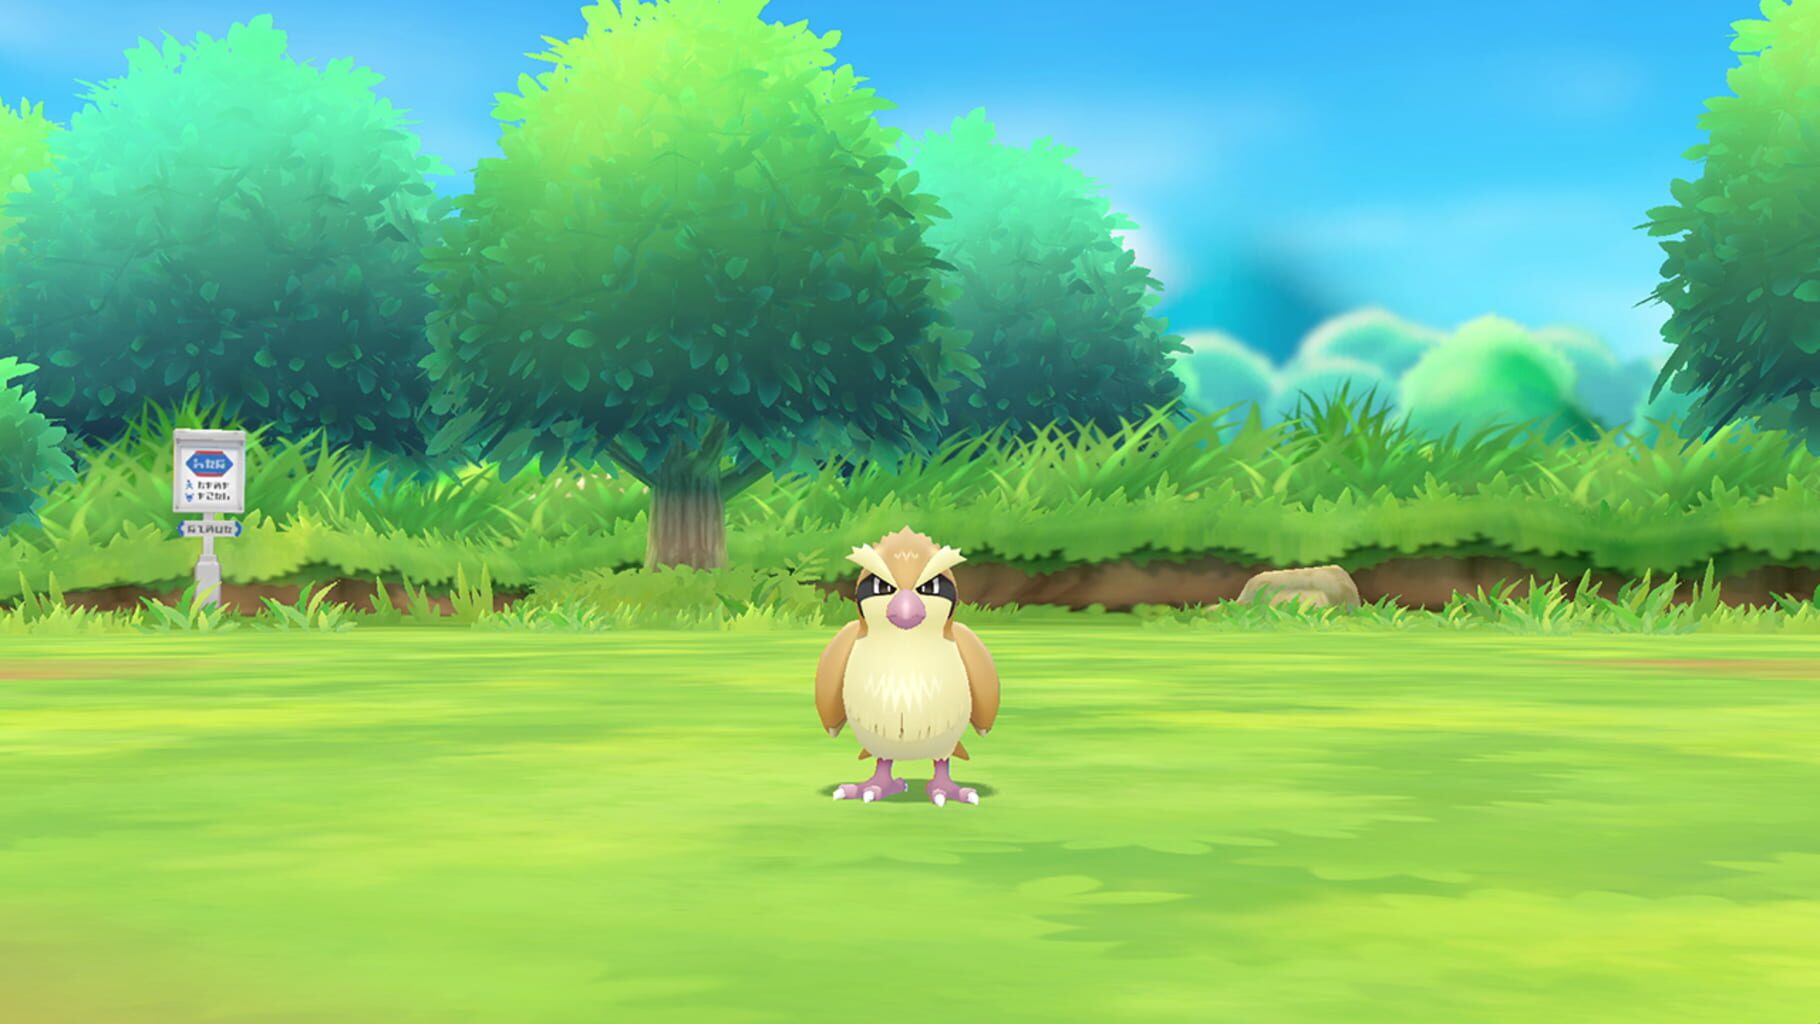 Screenshot for Pokémon: Let's Go, Pikachu!